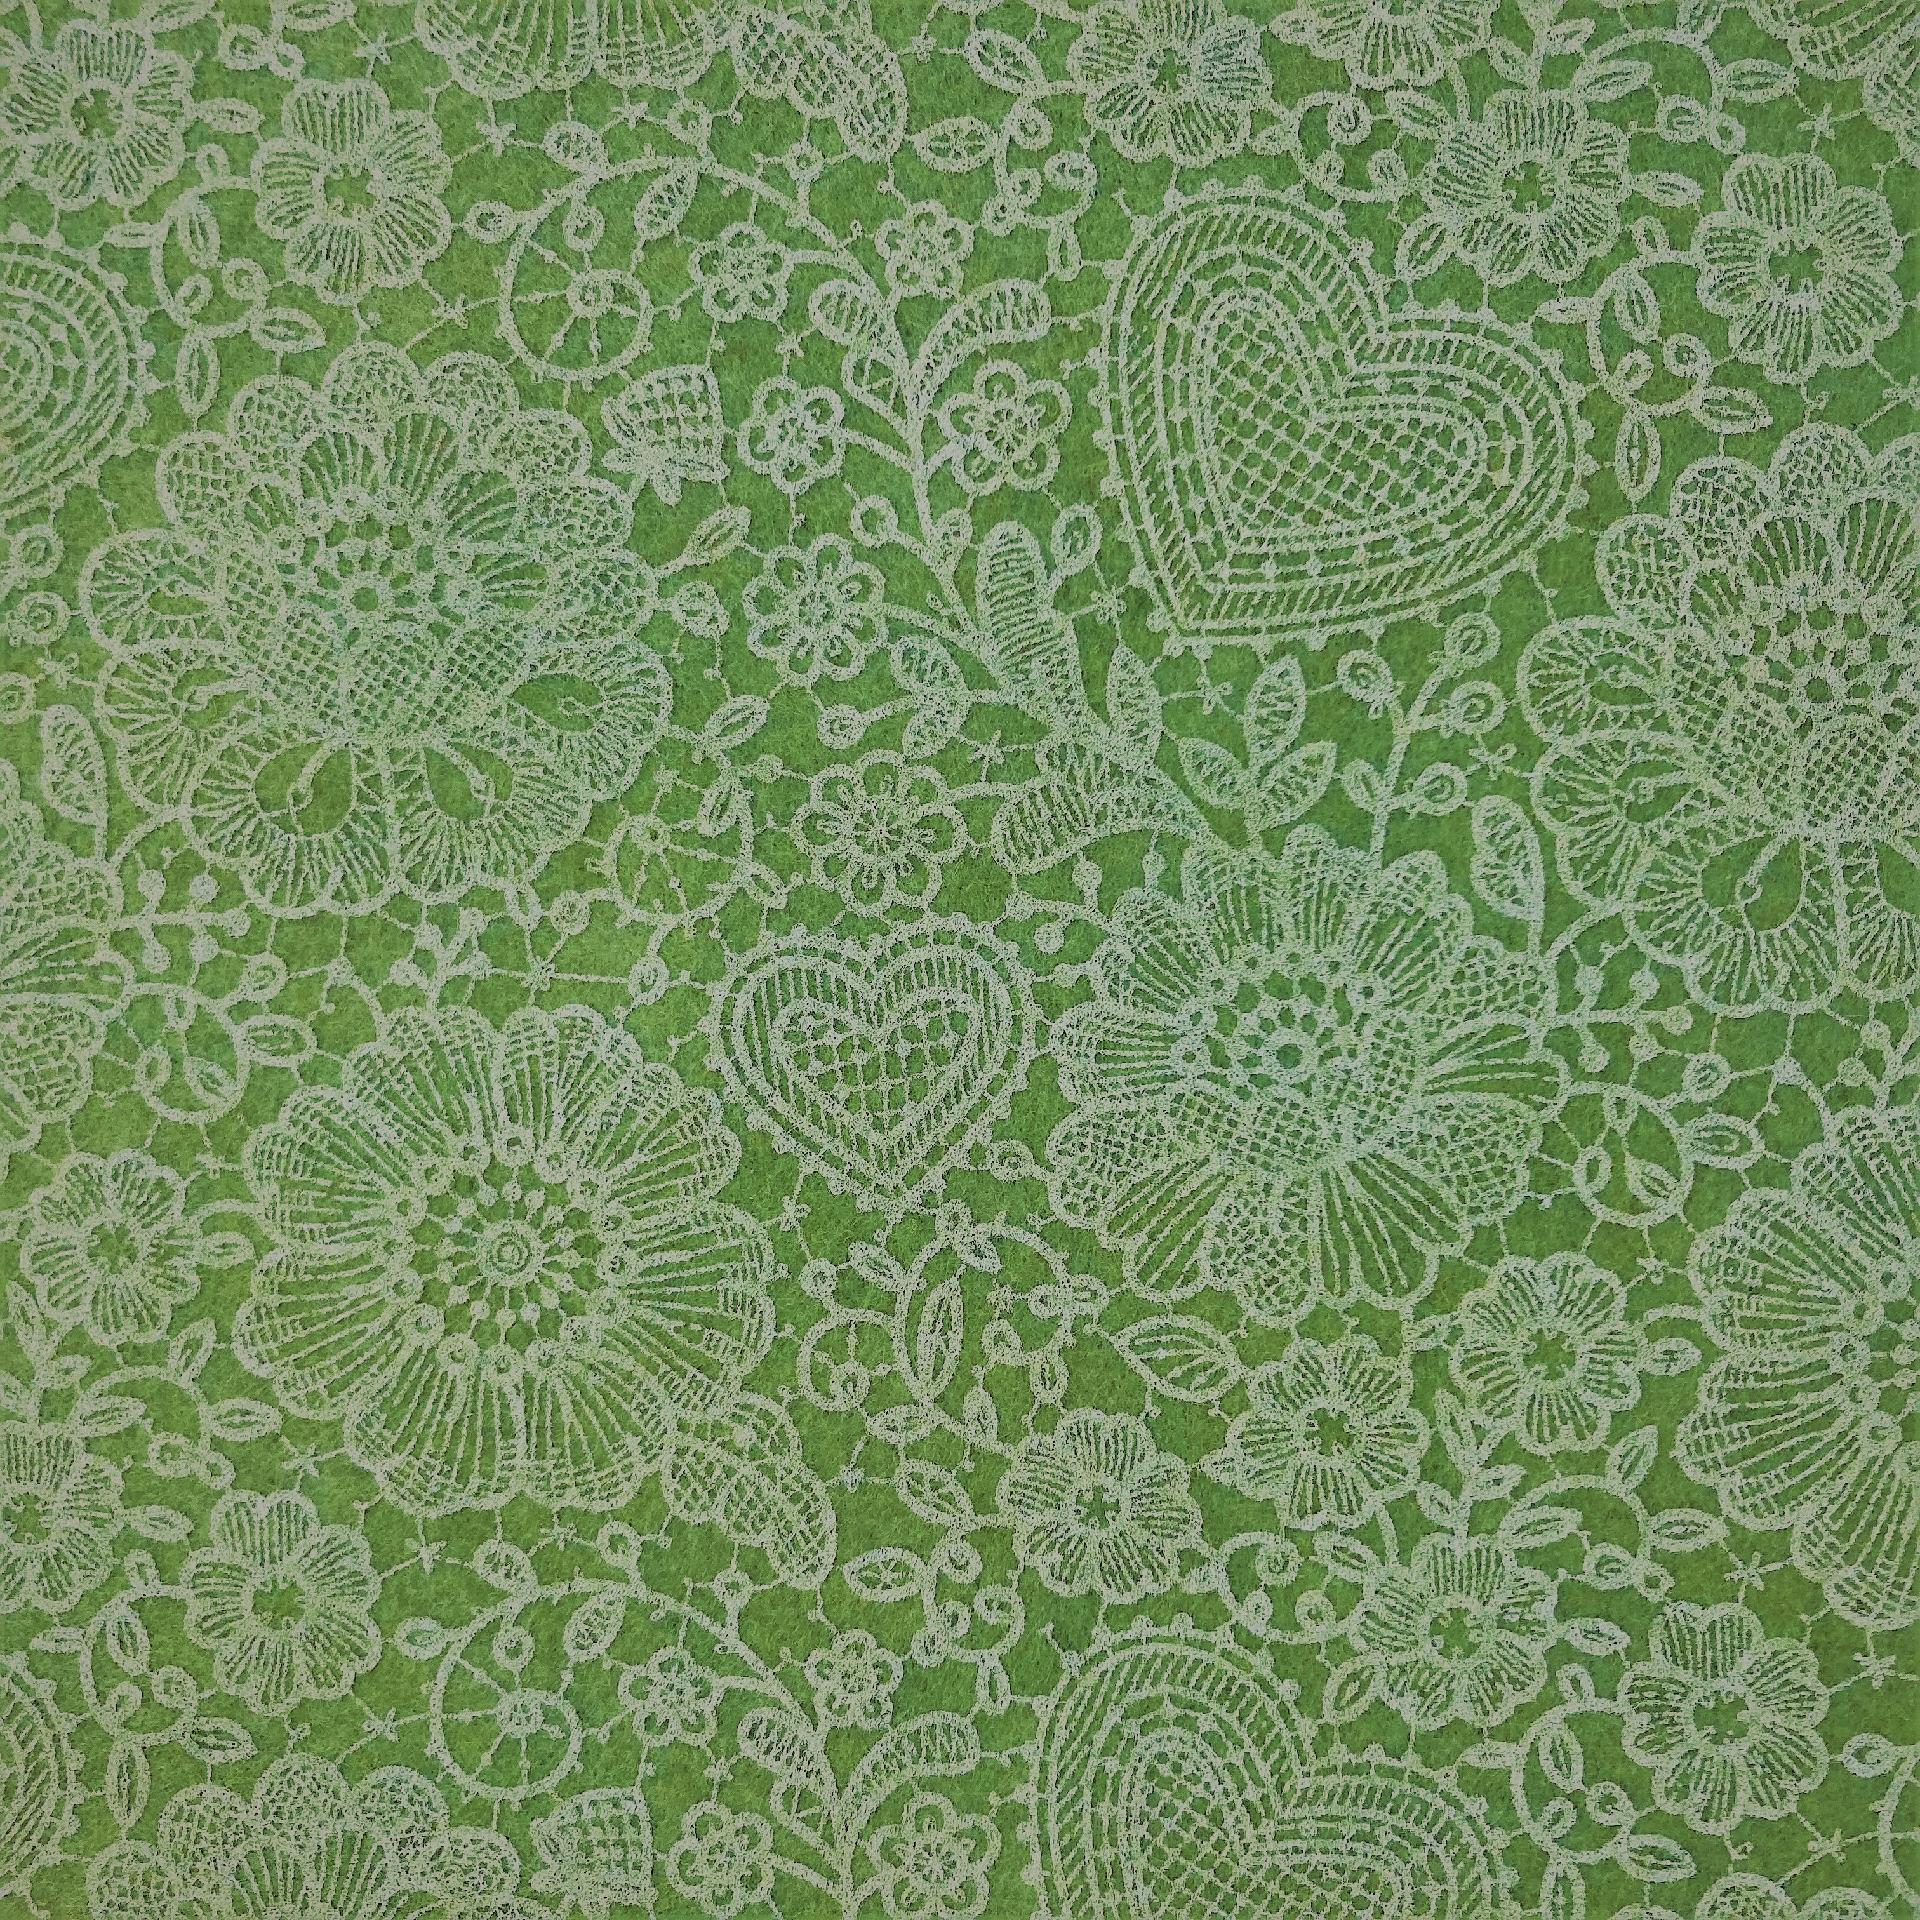 Pannolenci verde salvia/bianco effetto pizzo Stafil 90 x 50cm - Bagheria  (Palermo)